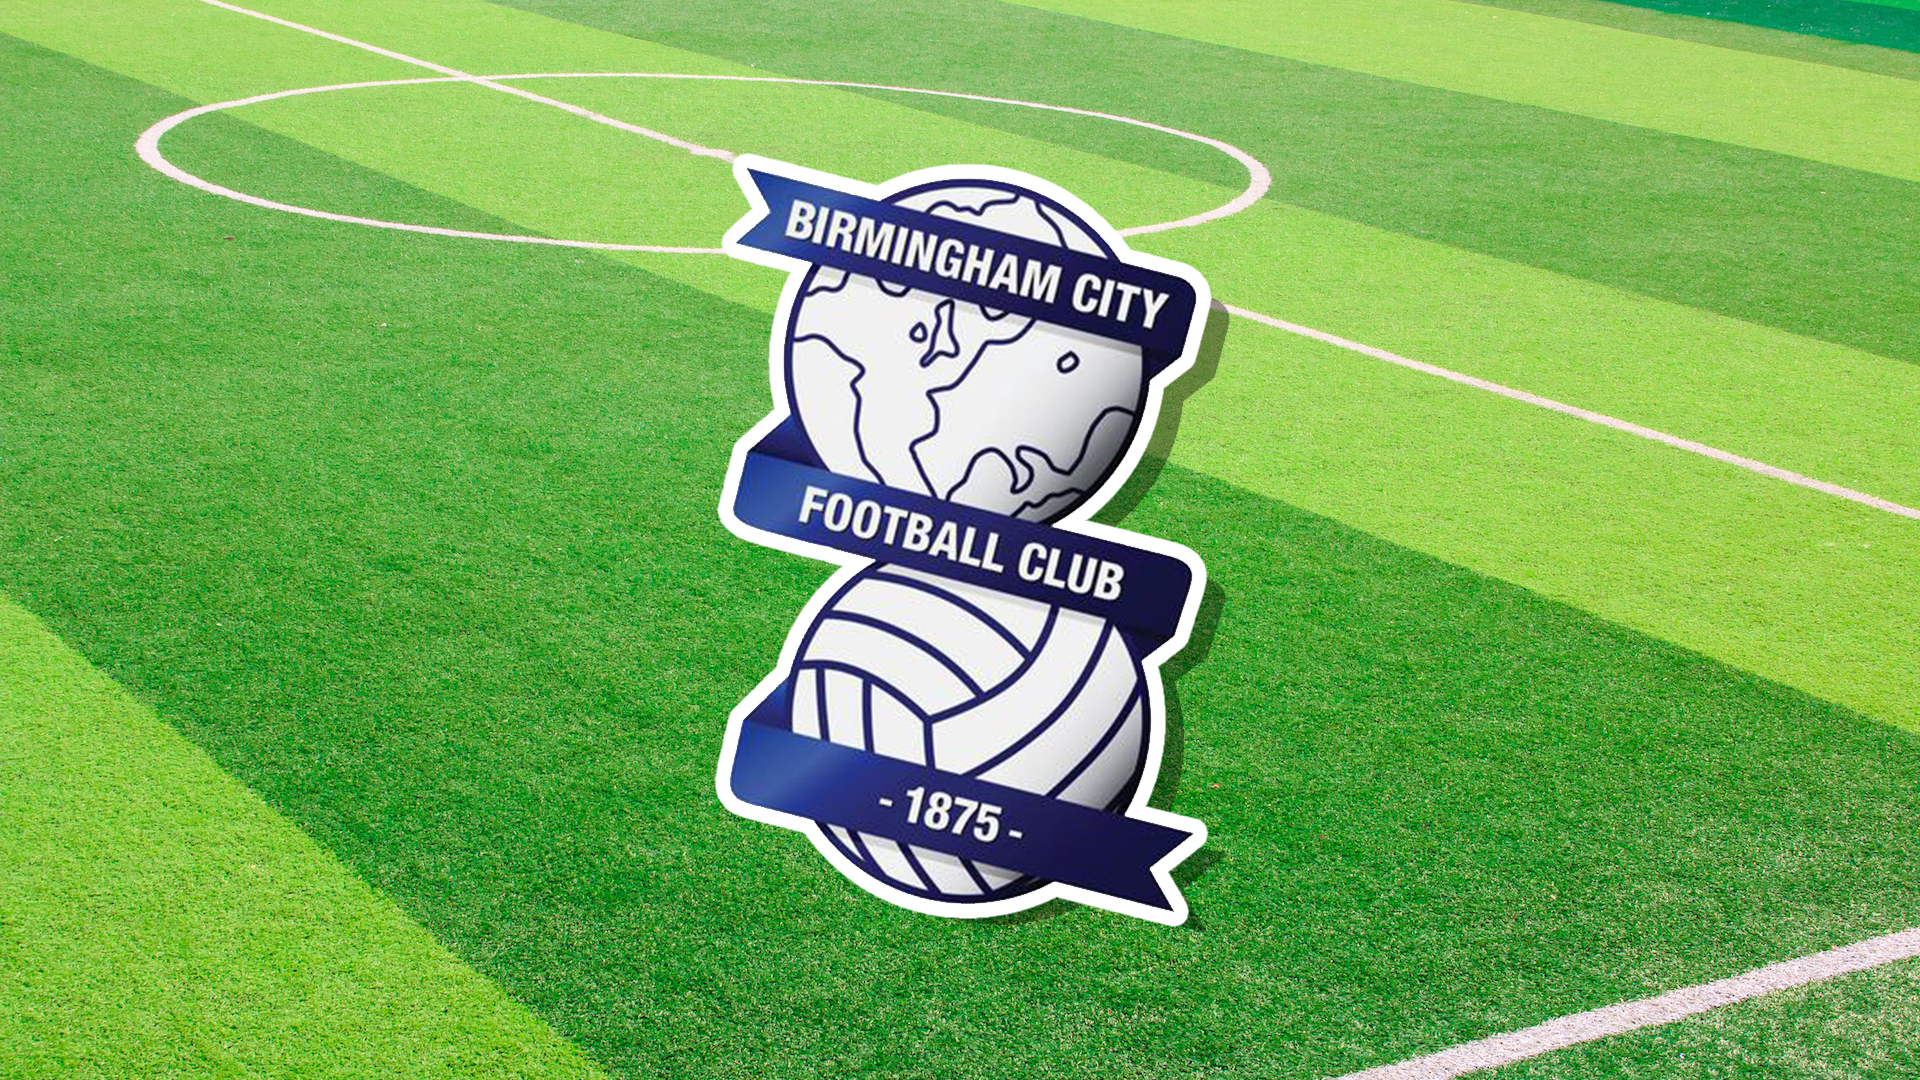 Birmingham City's badge set against a football pitch